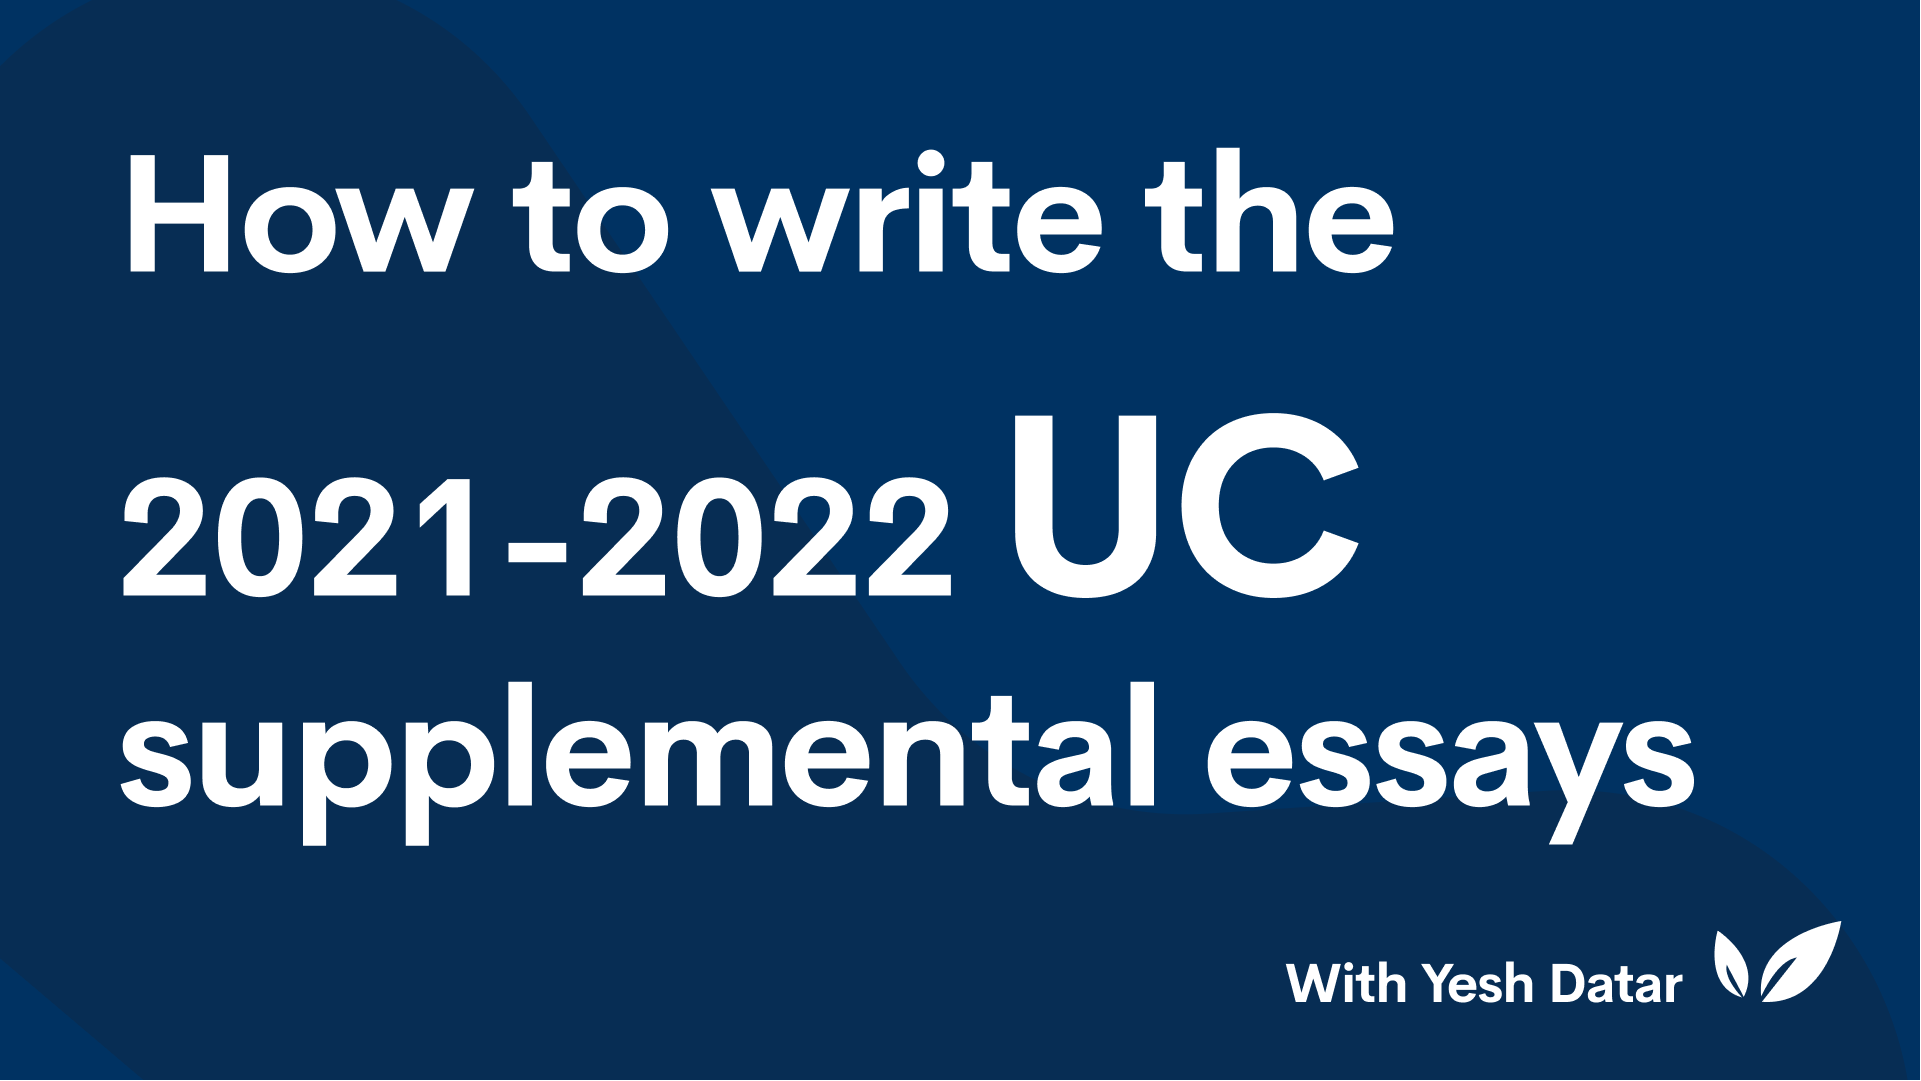 uc essay how to write